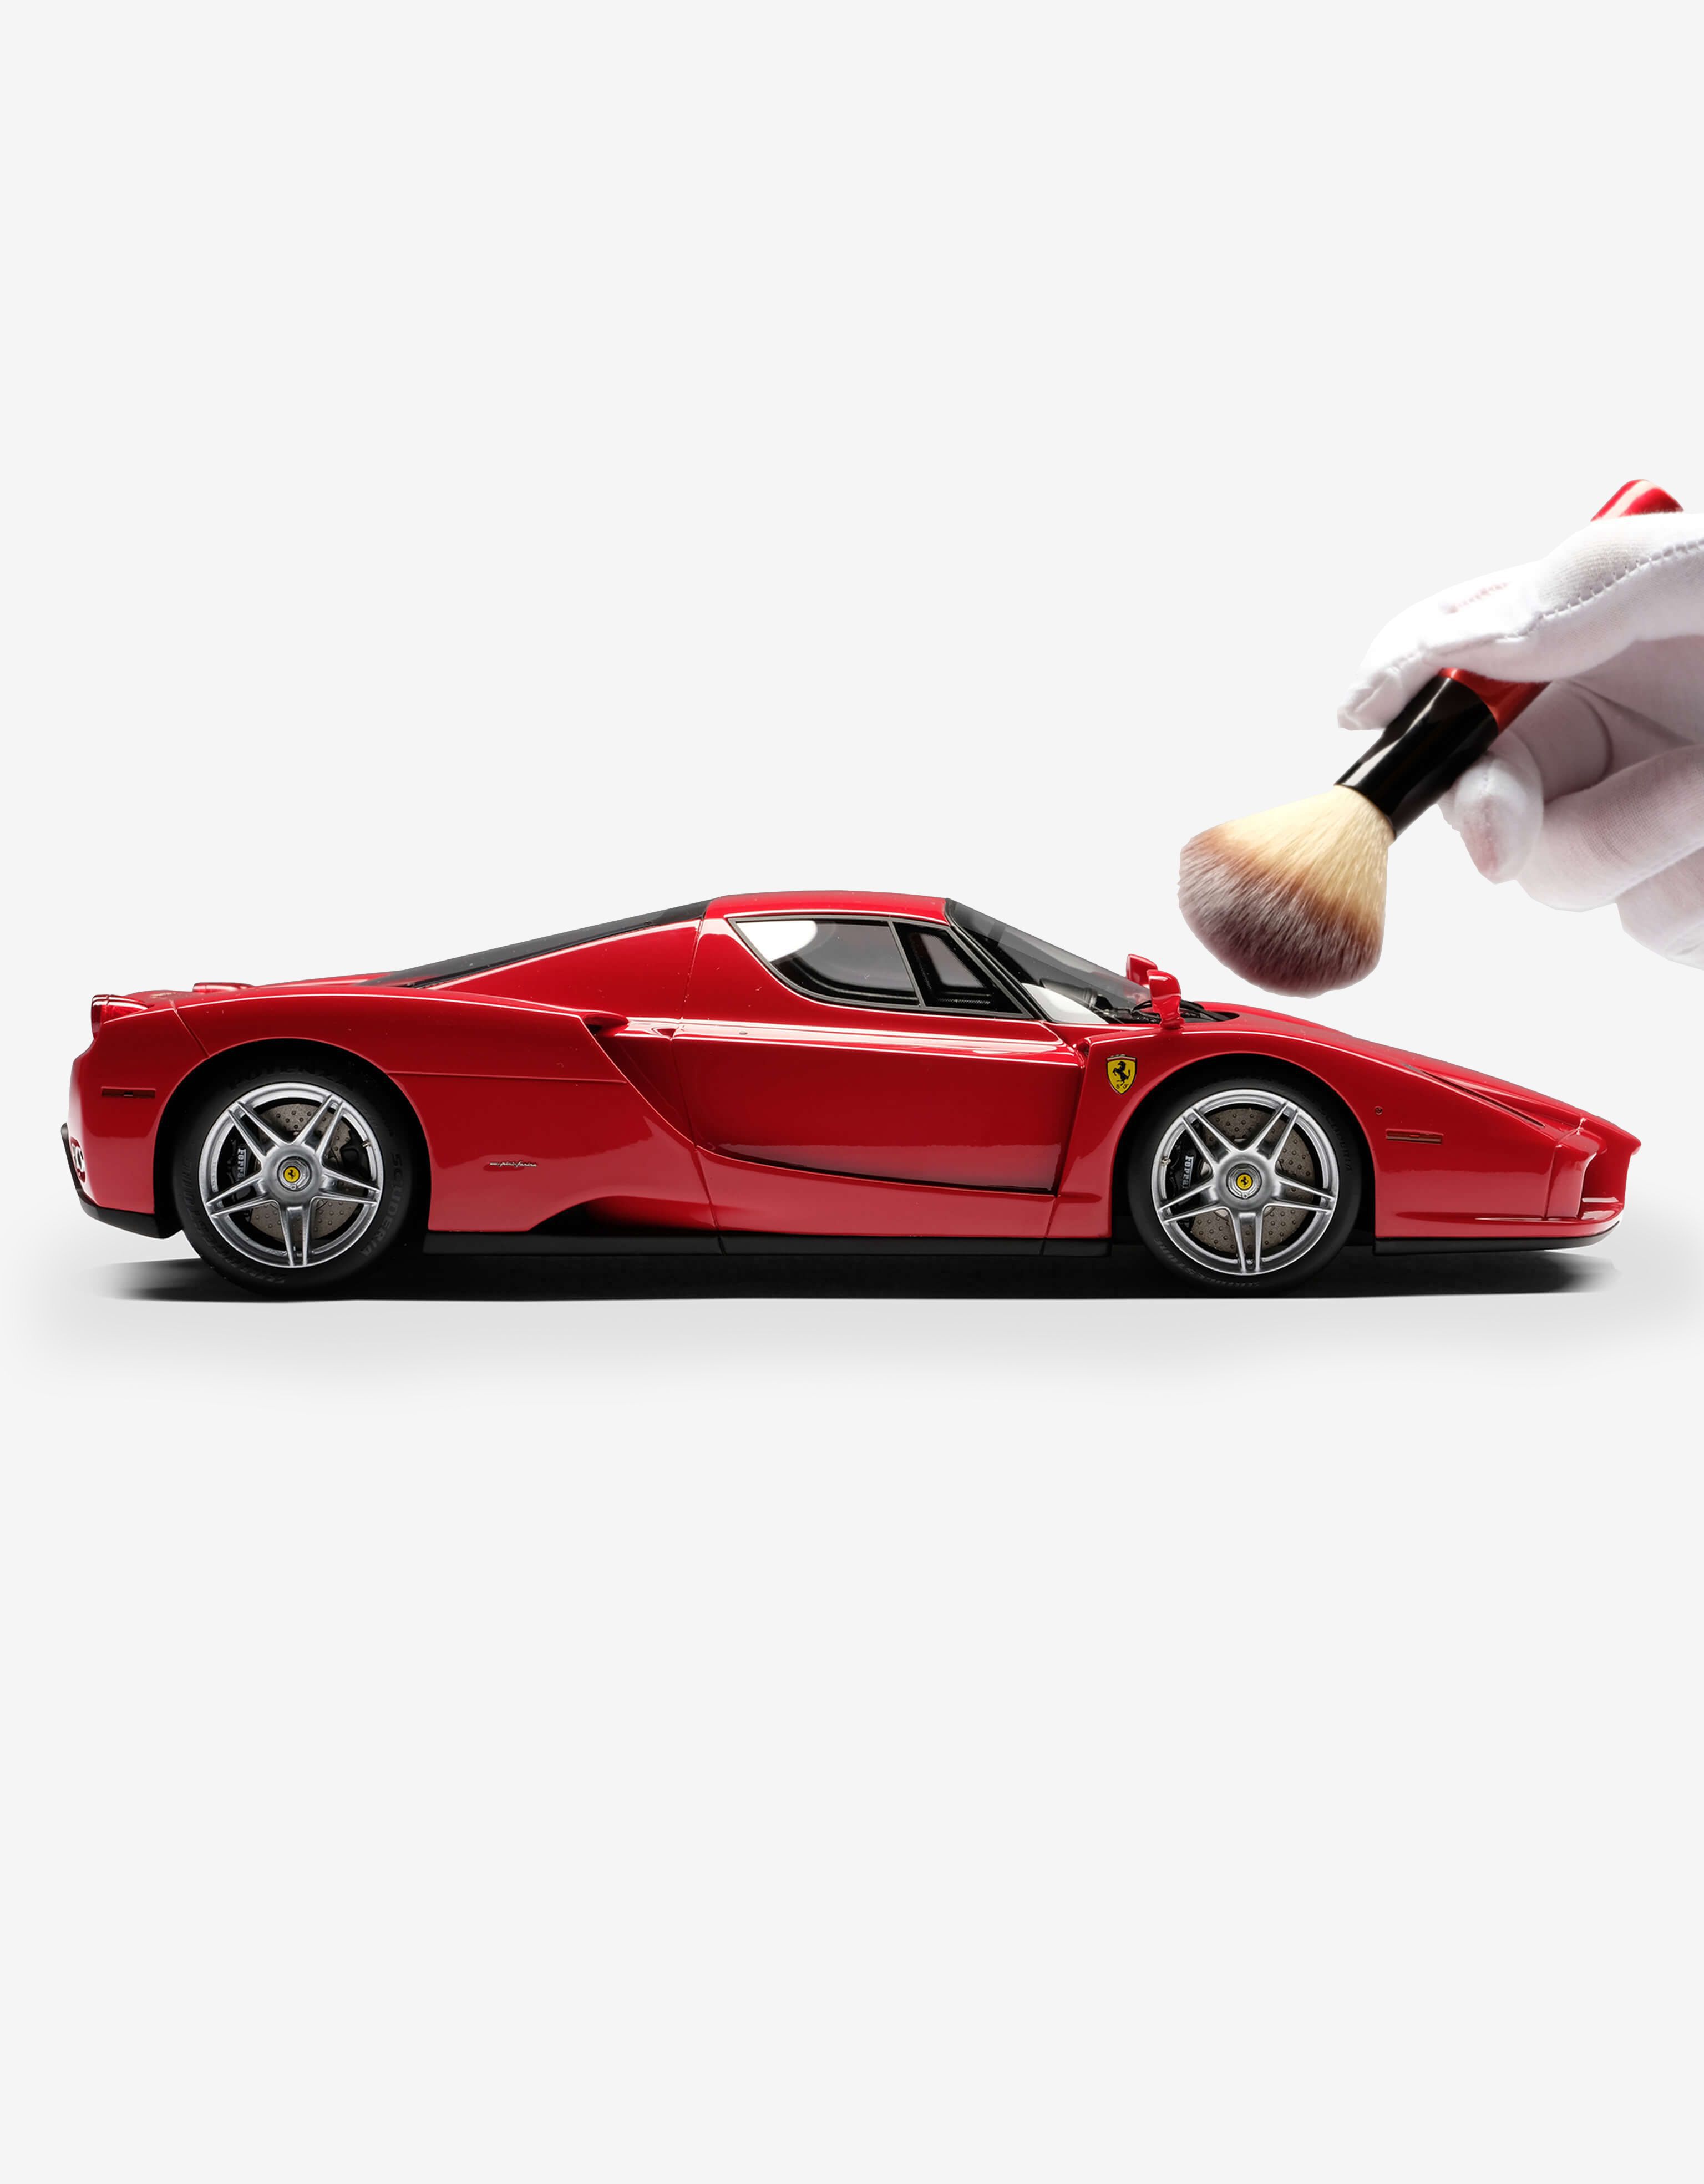 Ferrari Modellauto Ferrari Enzo im Maßstab 1:18 Rot L7814f